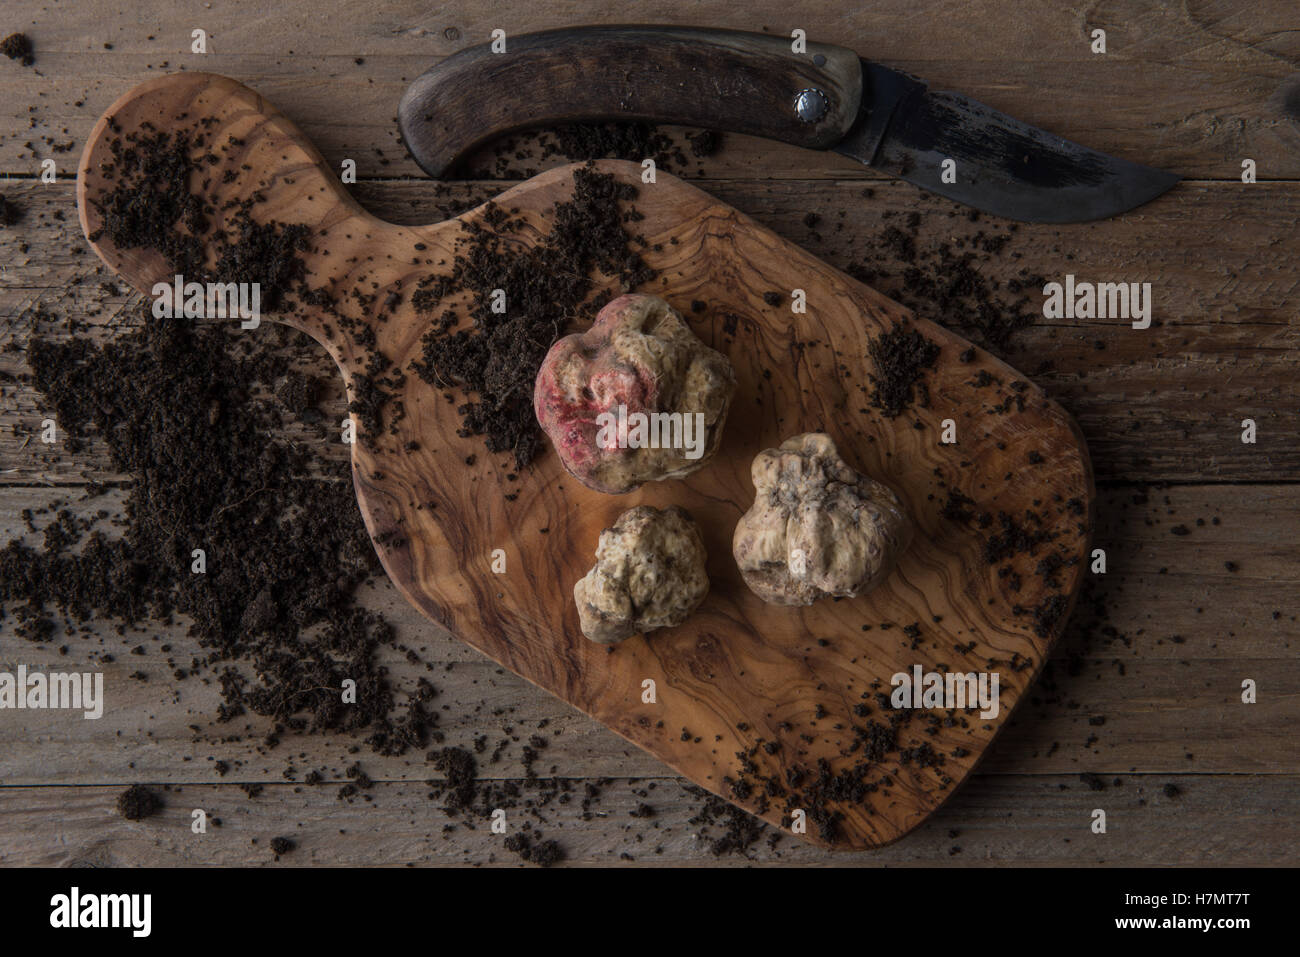 Top view alba white truffle on wood board and truffle'sknife Stock Photo